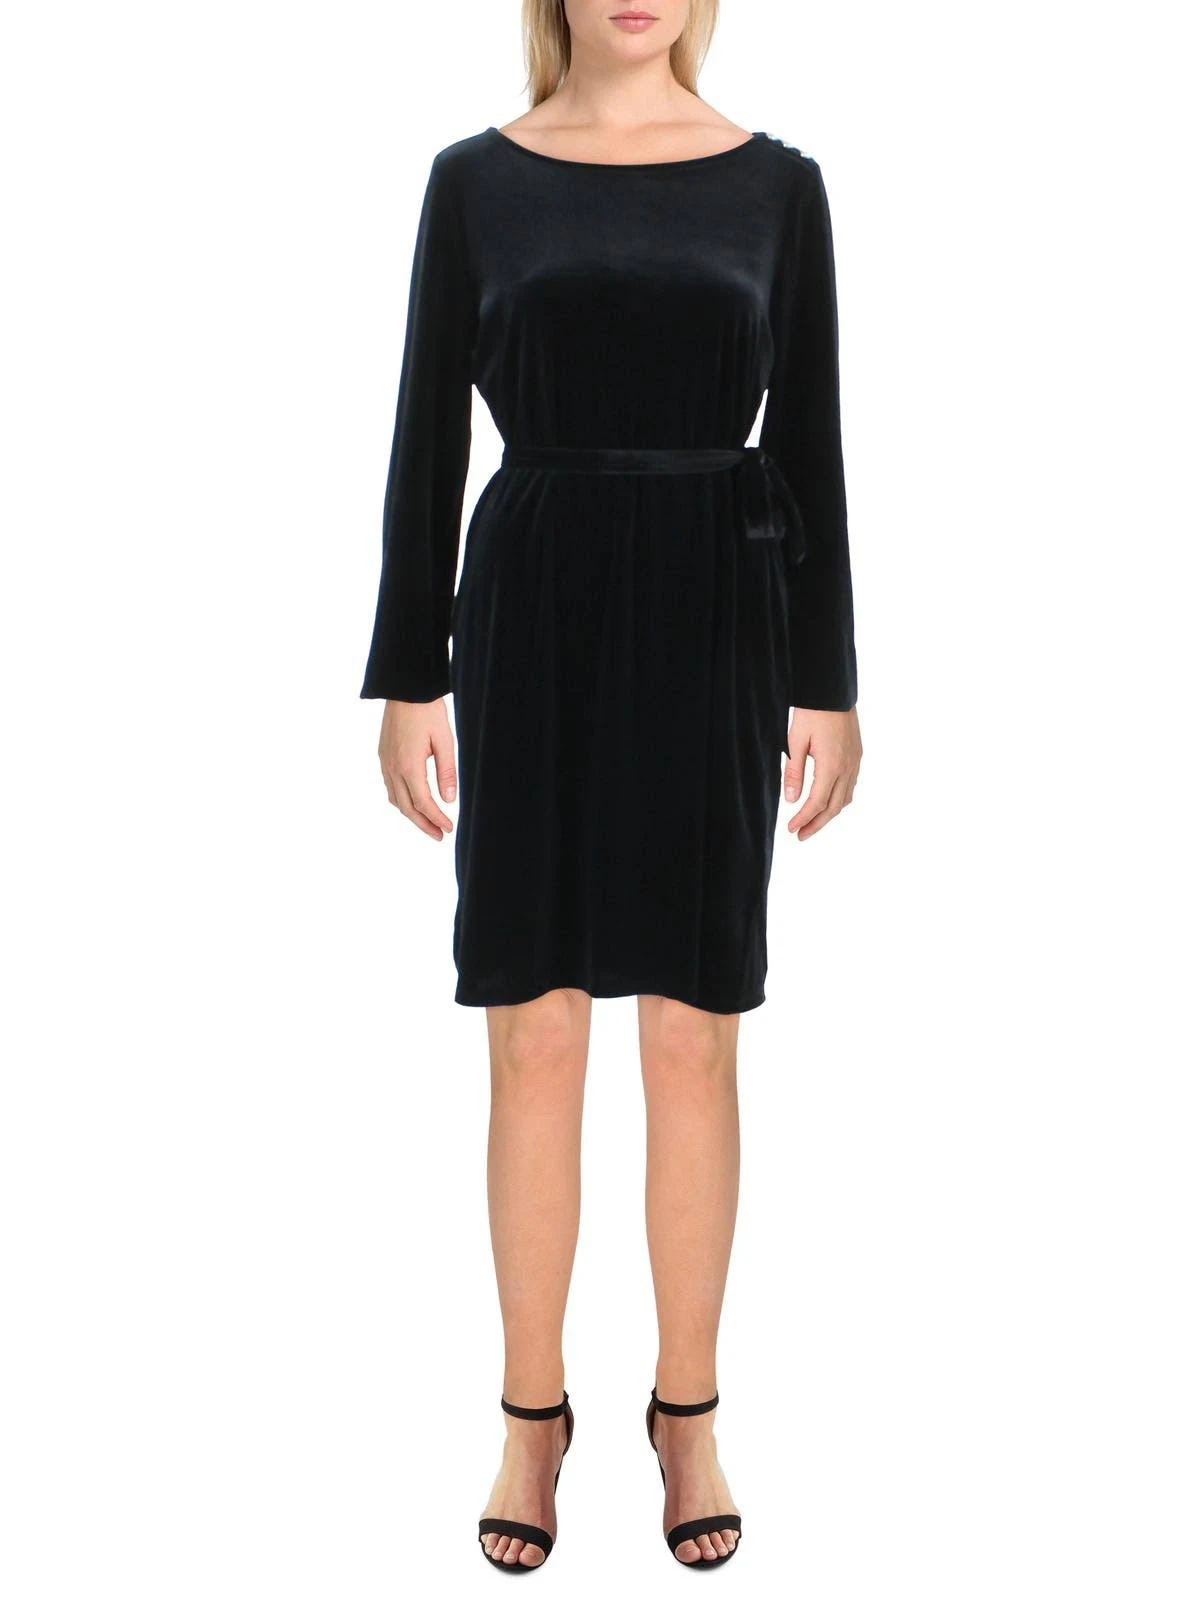 Elegant Black Velvet Sheath Dress with Long Sleeves and Tie Front | Image